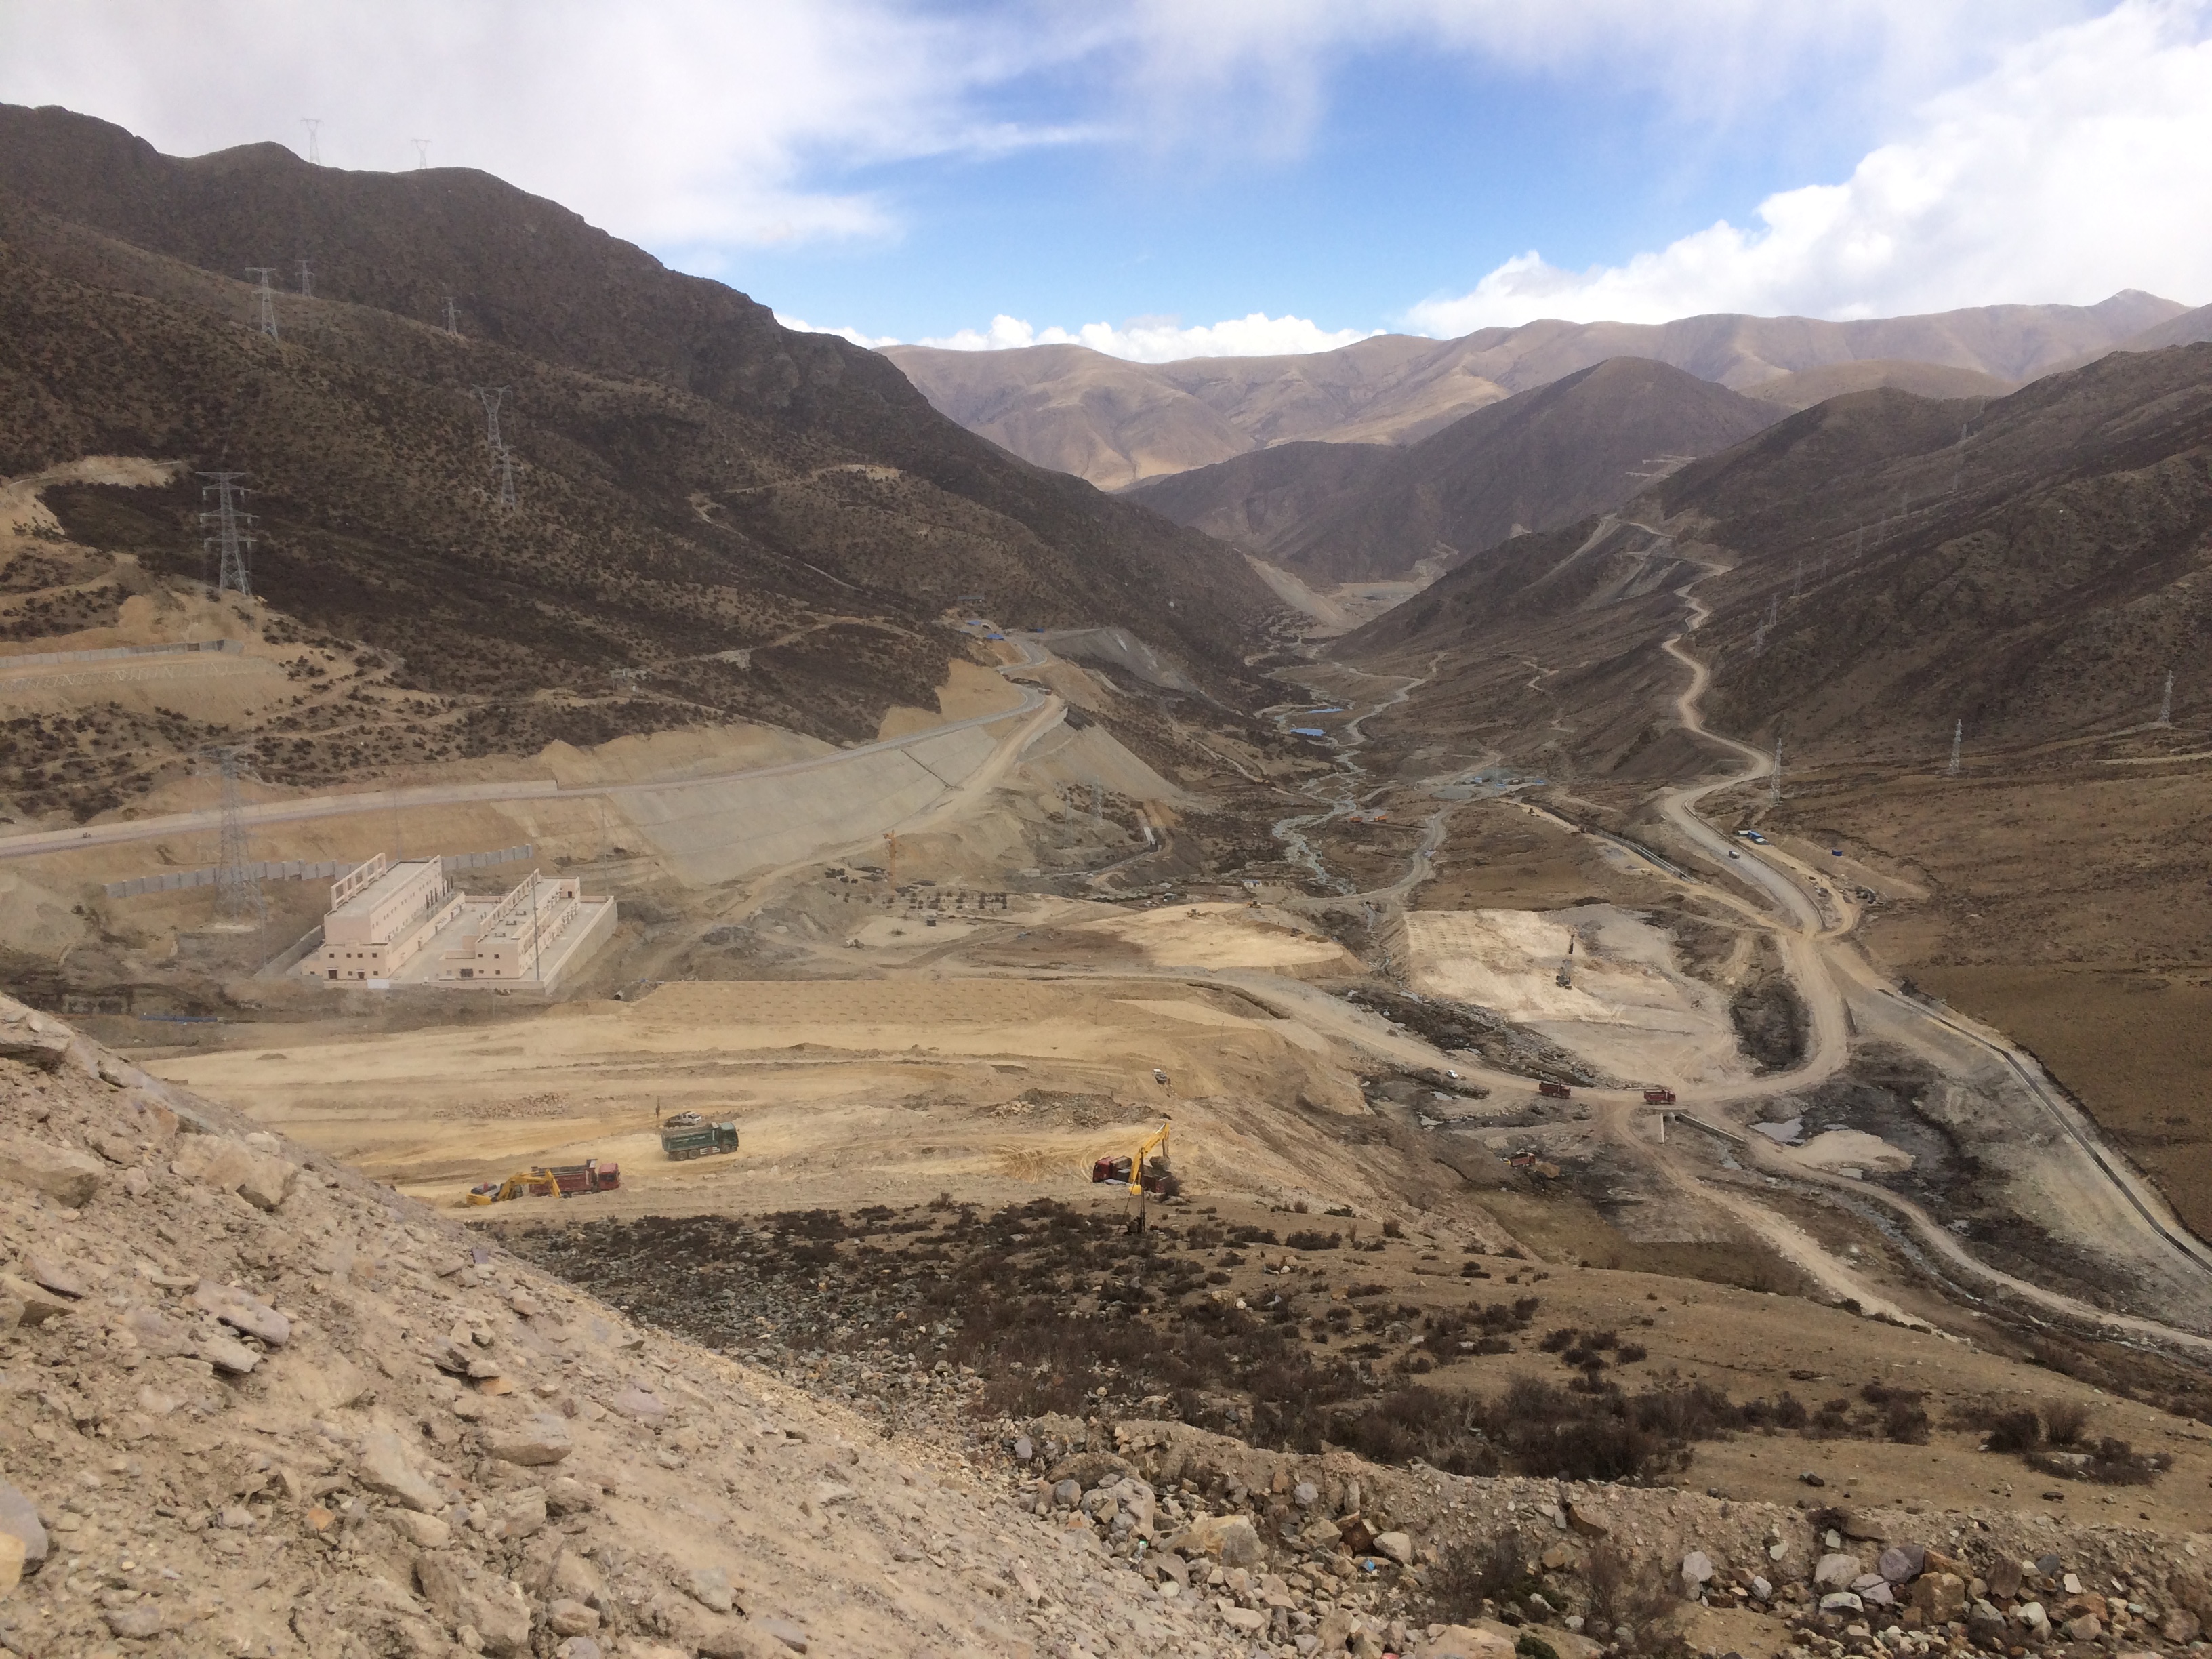 Tibet Julong Copper mine site in Qulong, China